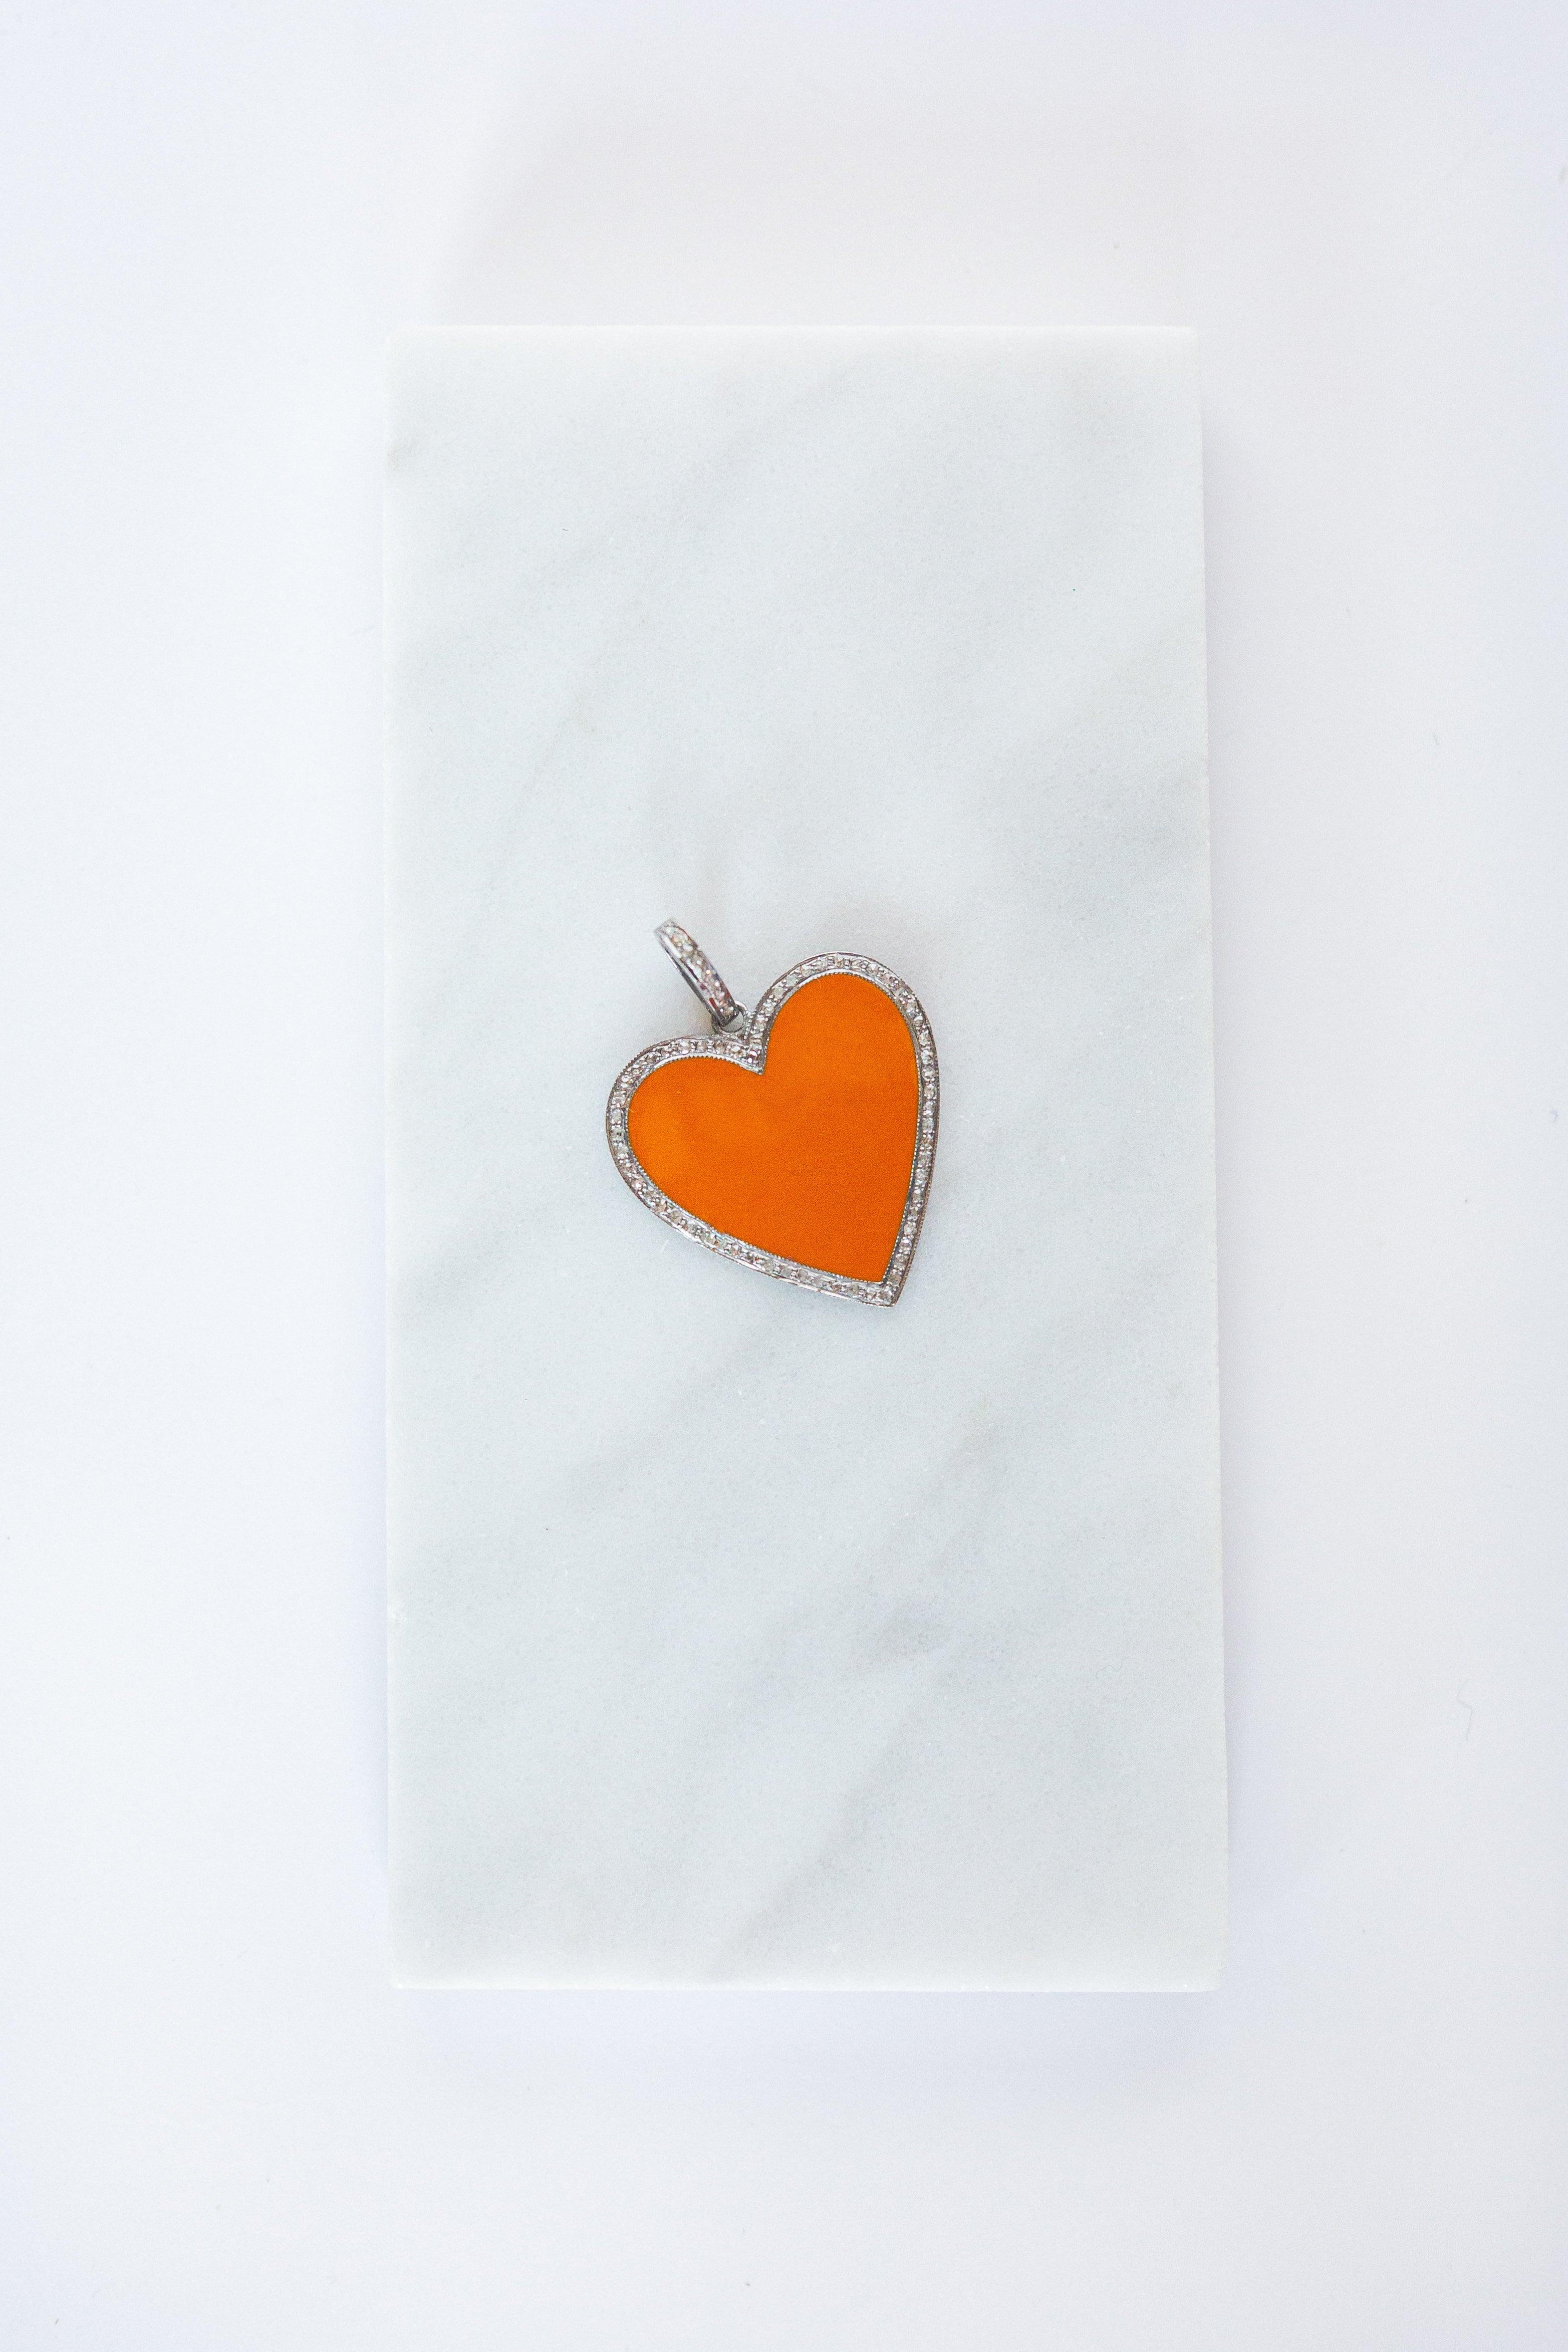 Medium Heart - Orange/Silver